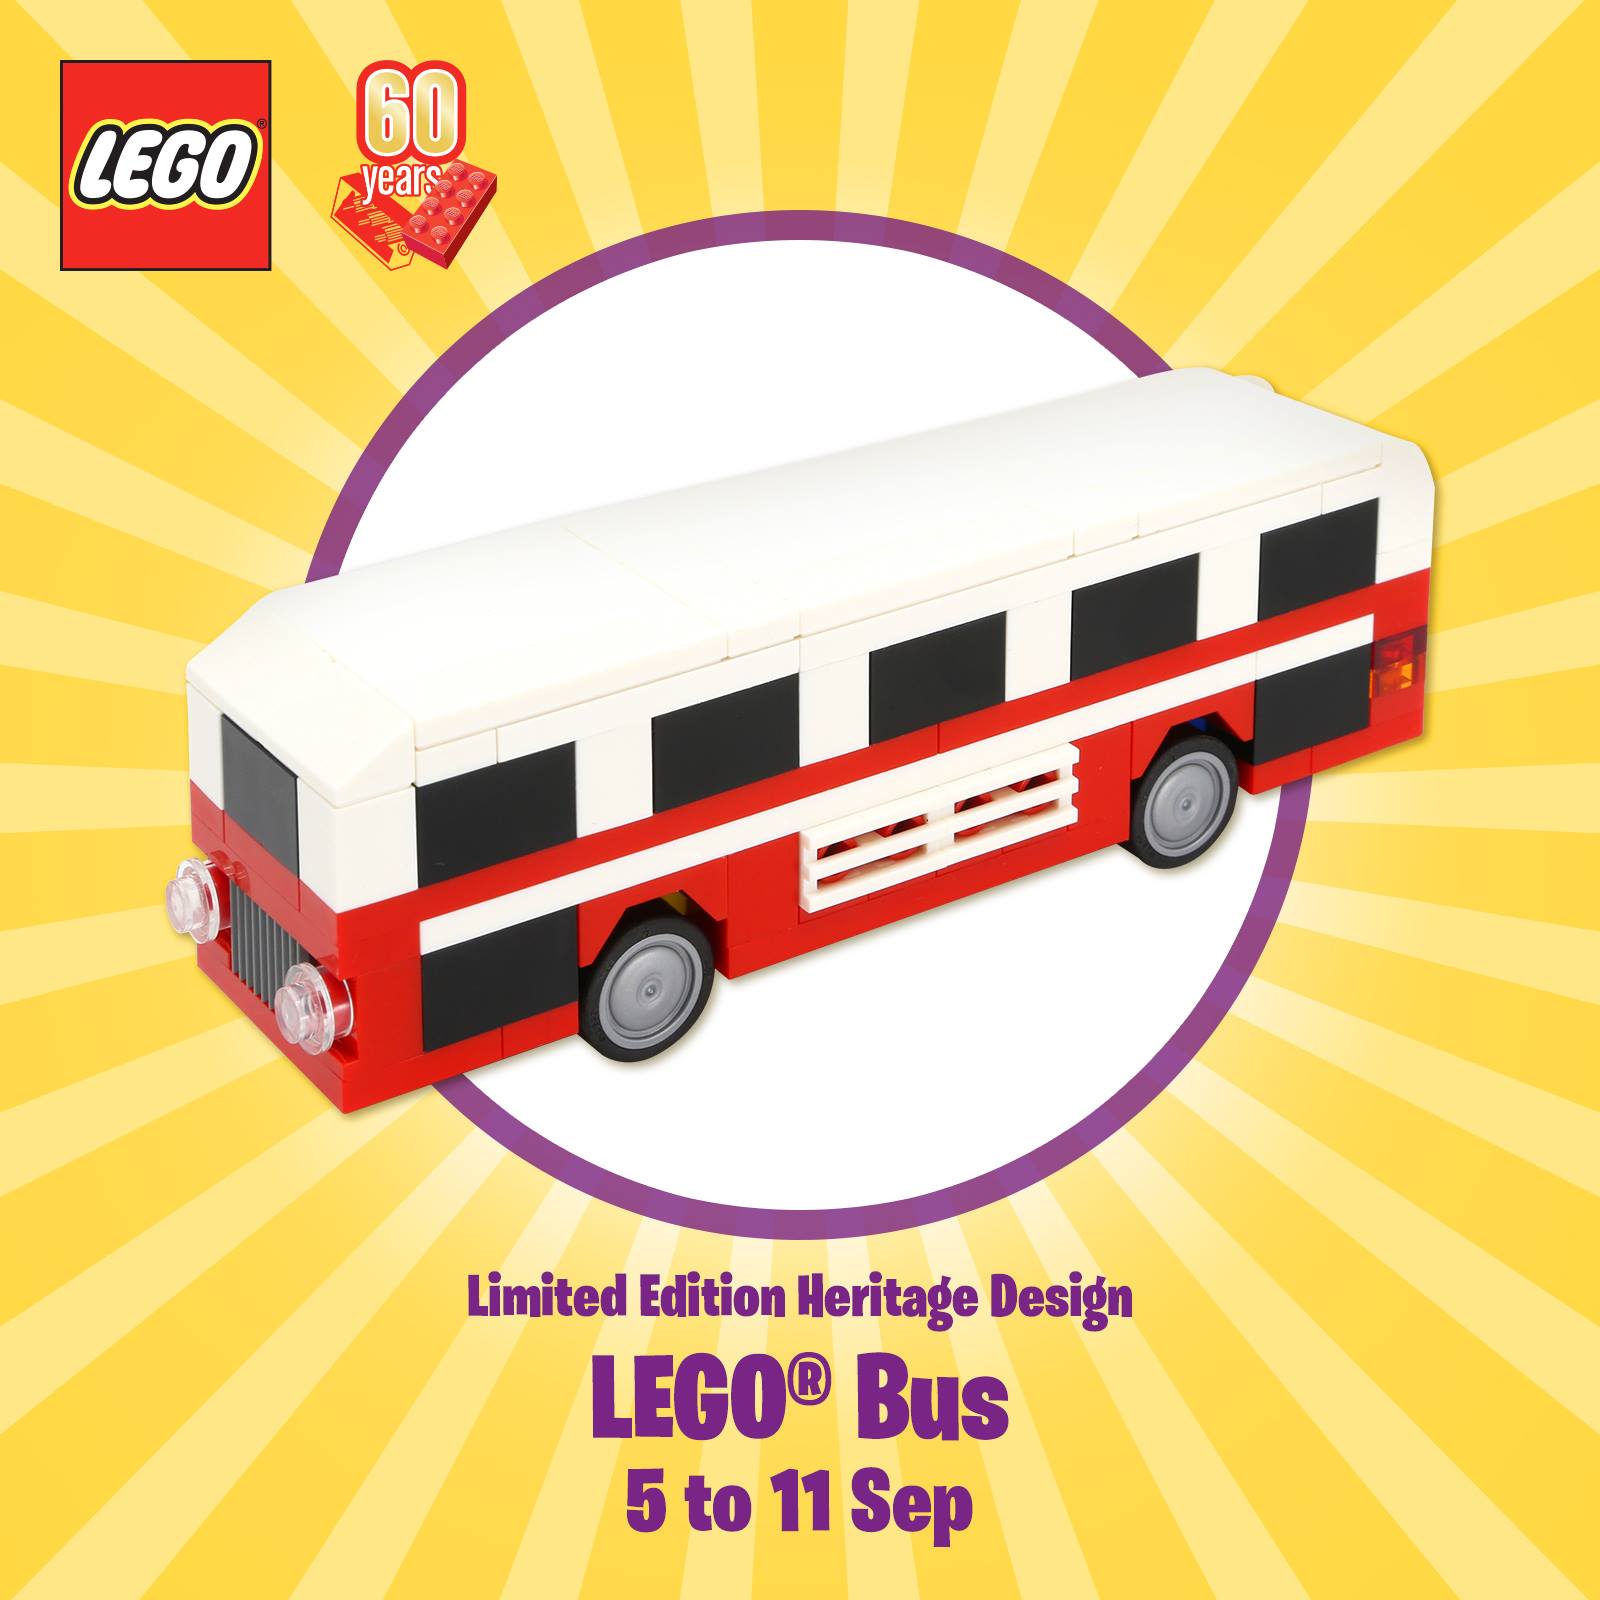 LEGO 60th Anniversary Singapore bus